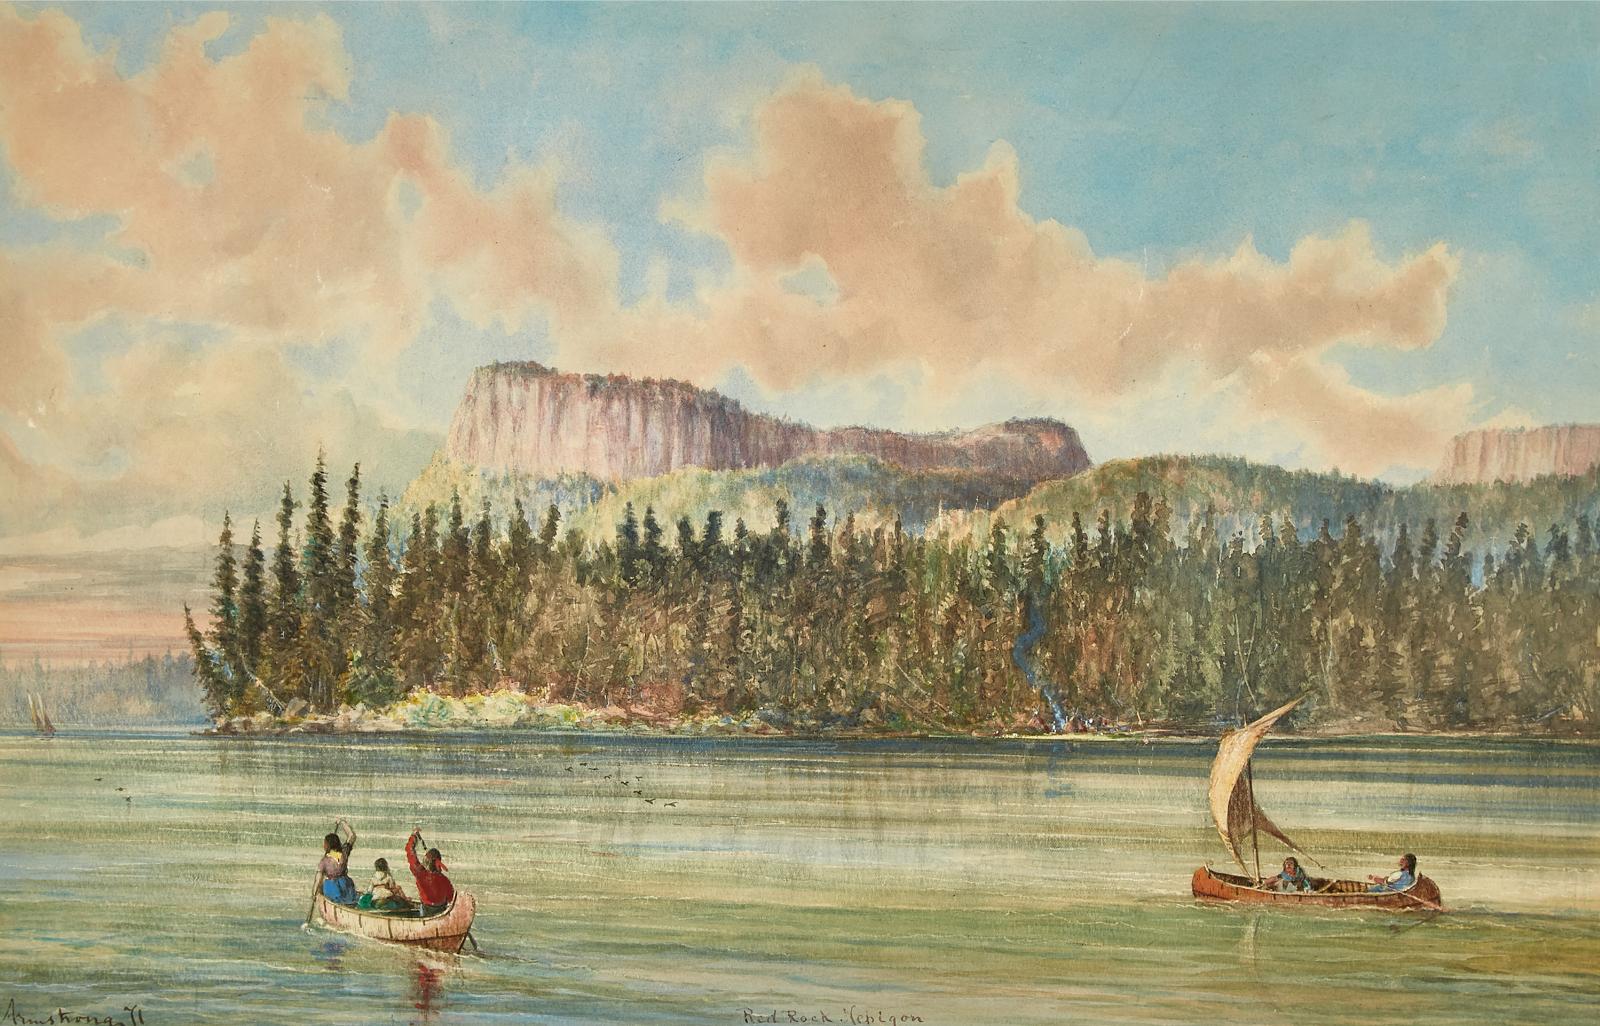 William Armstrong (1822-1914) - Red Rock, Nipigon, 1871